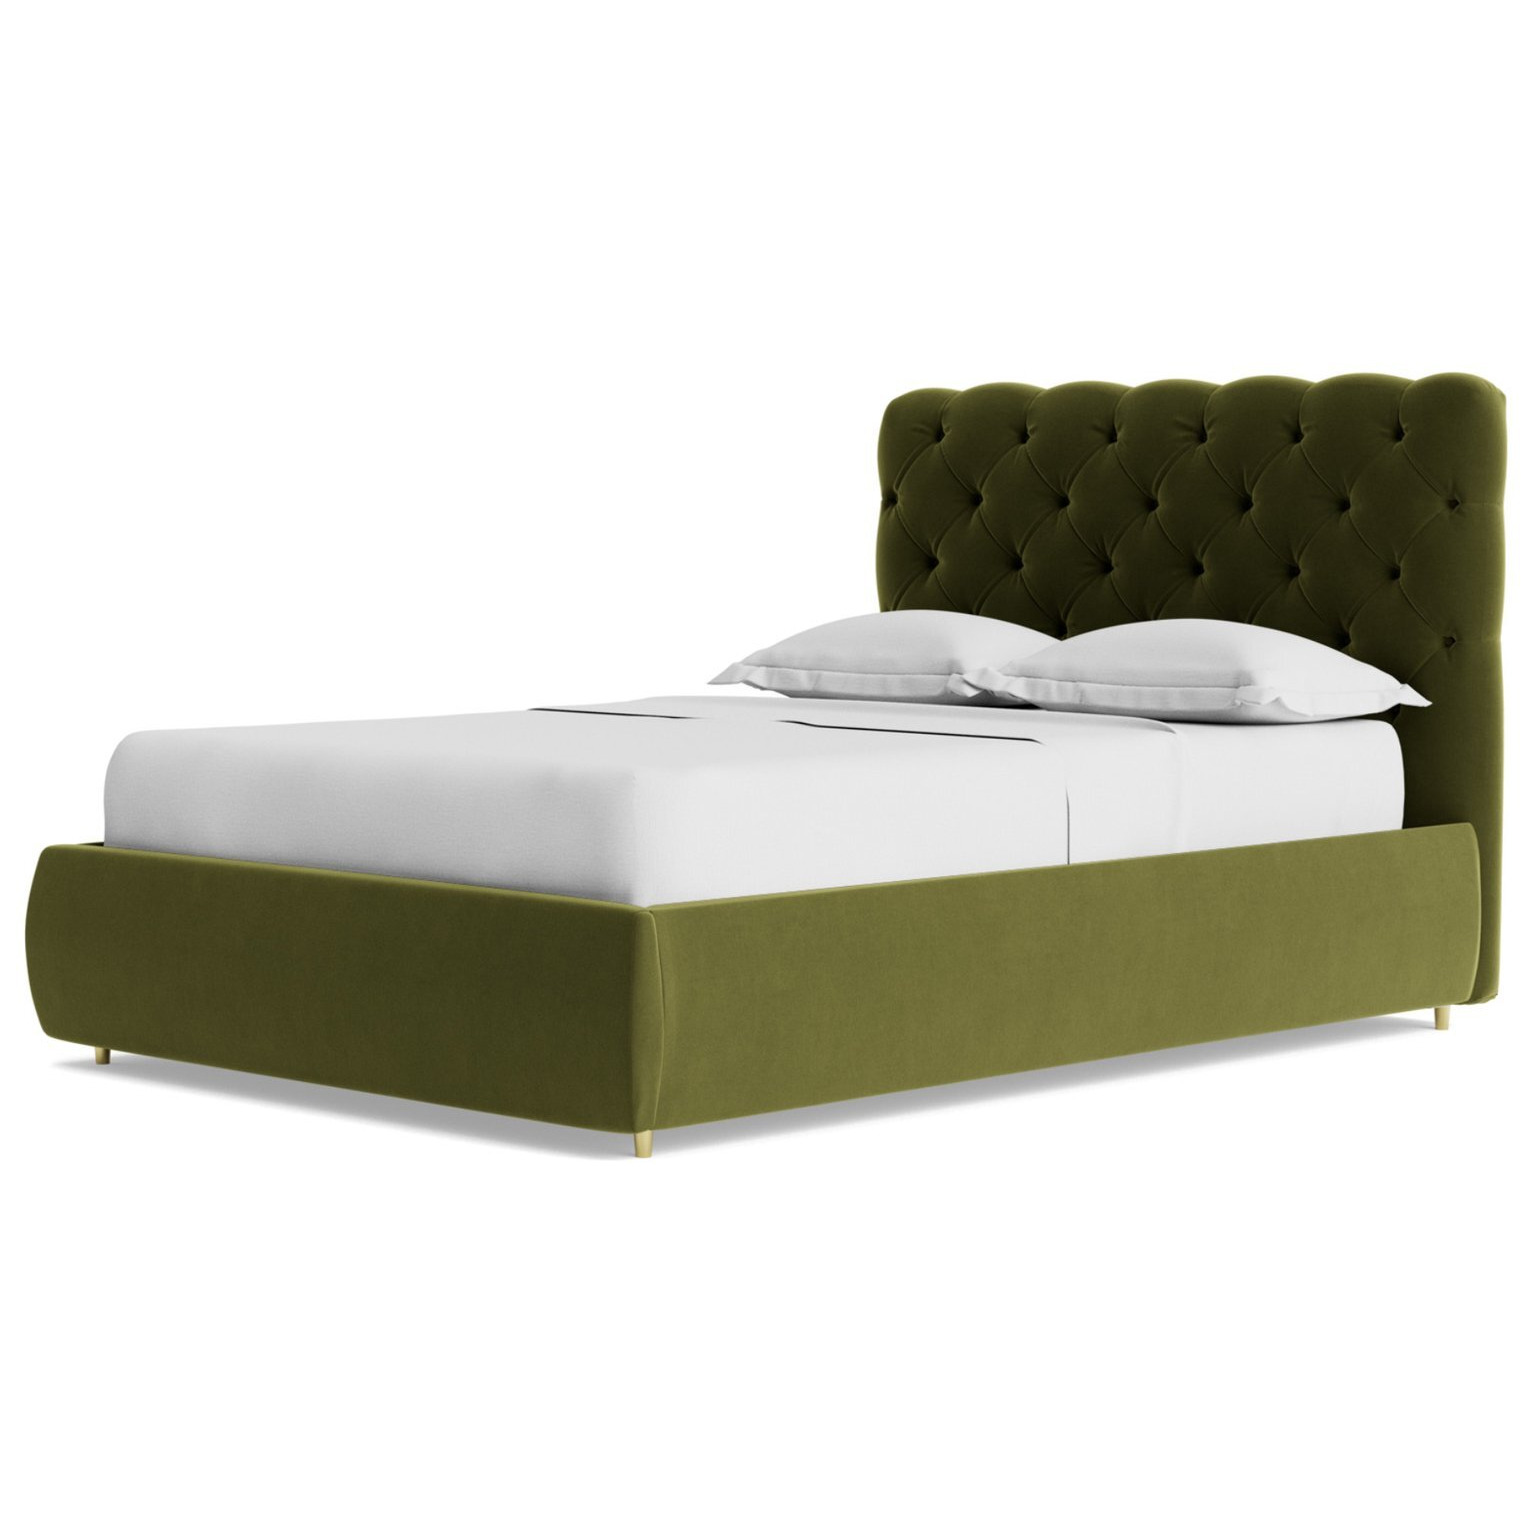 Swoon Burbage Velvet Double Ottoman Bedframe - Fern Green - image 1